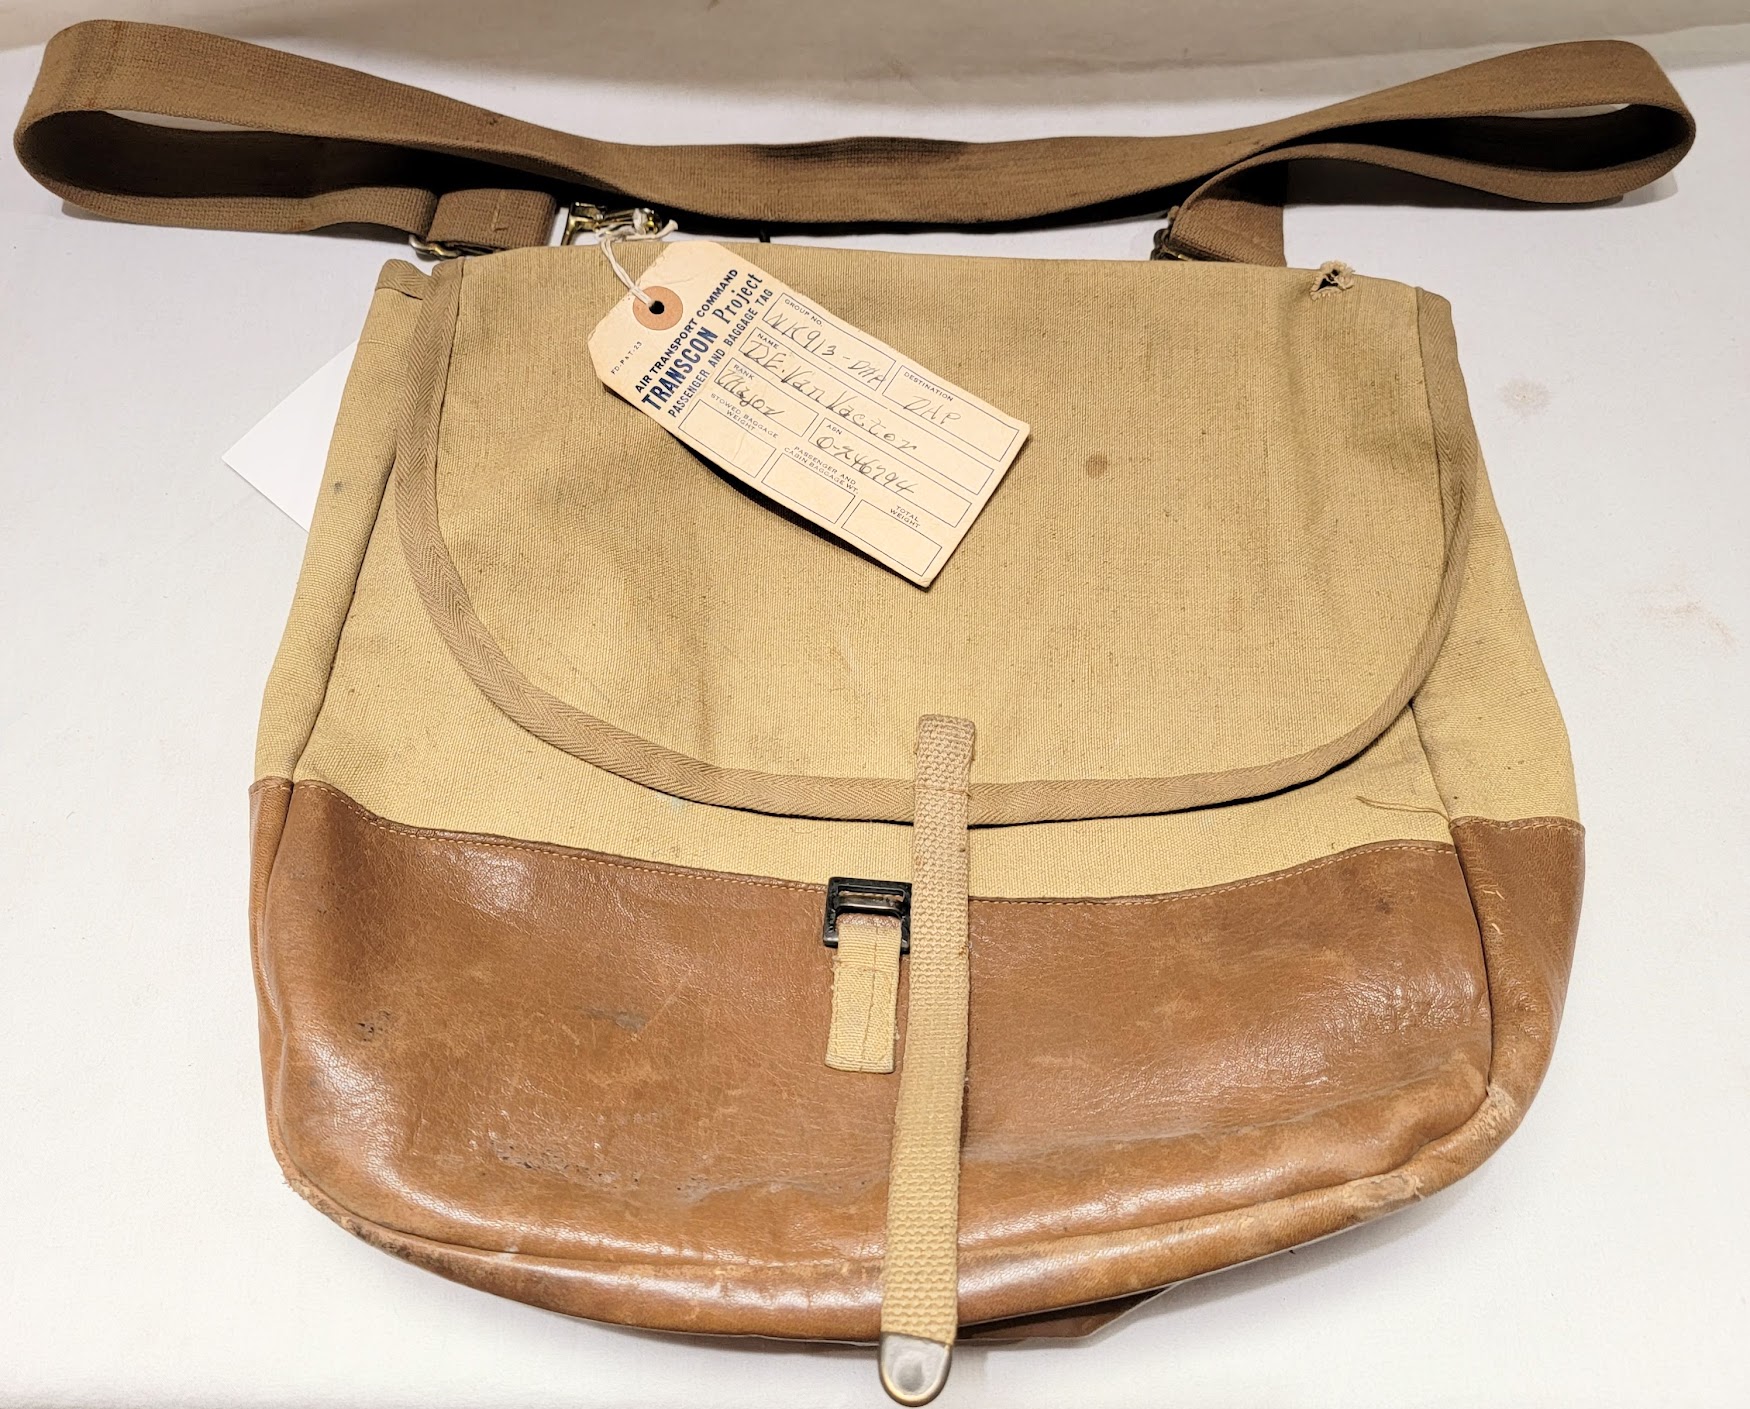 Identified Two War Normandy Veteran Gemsco Brand Officer's Musette Bag